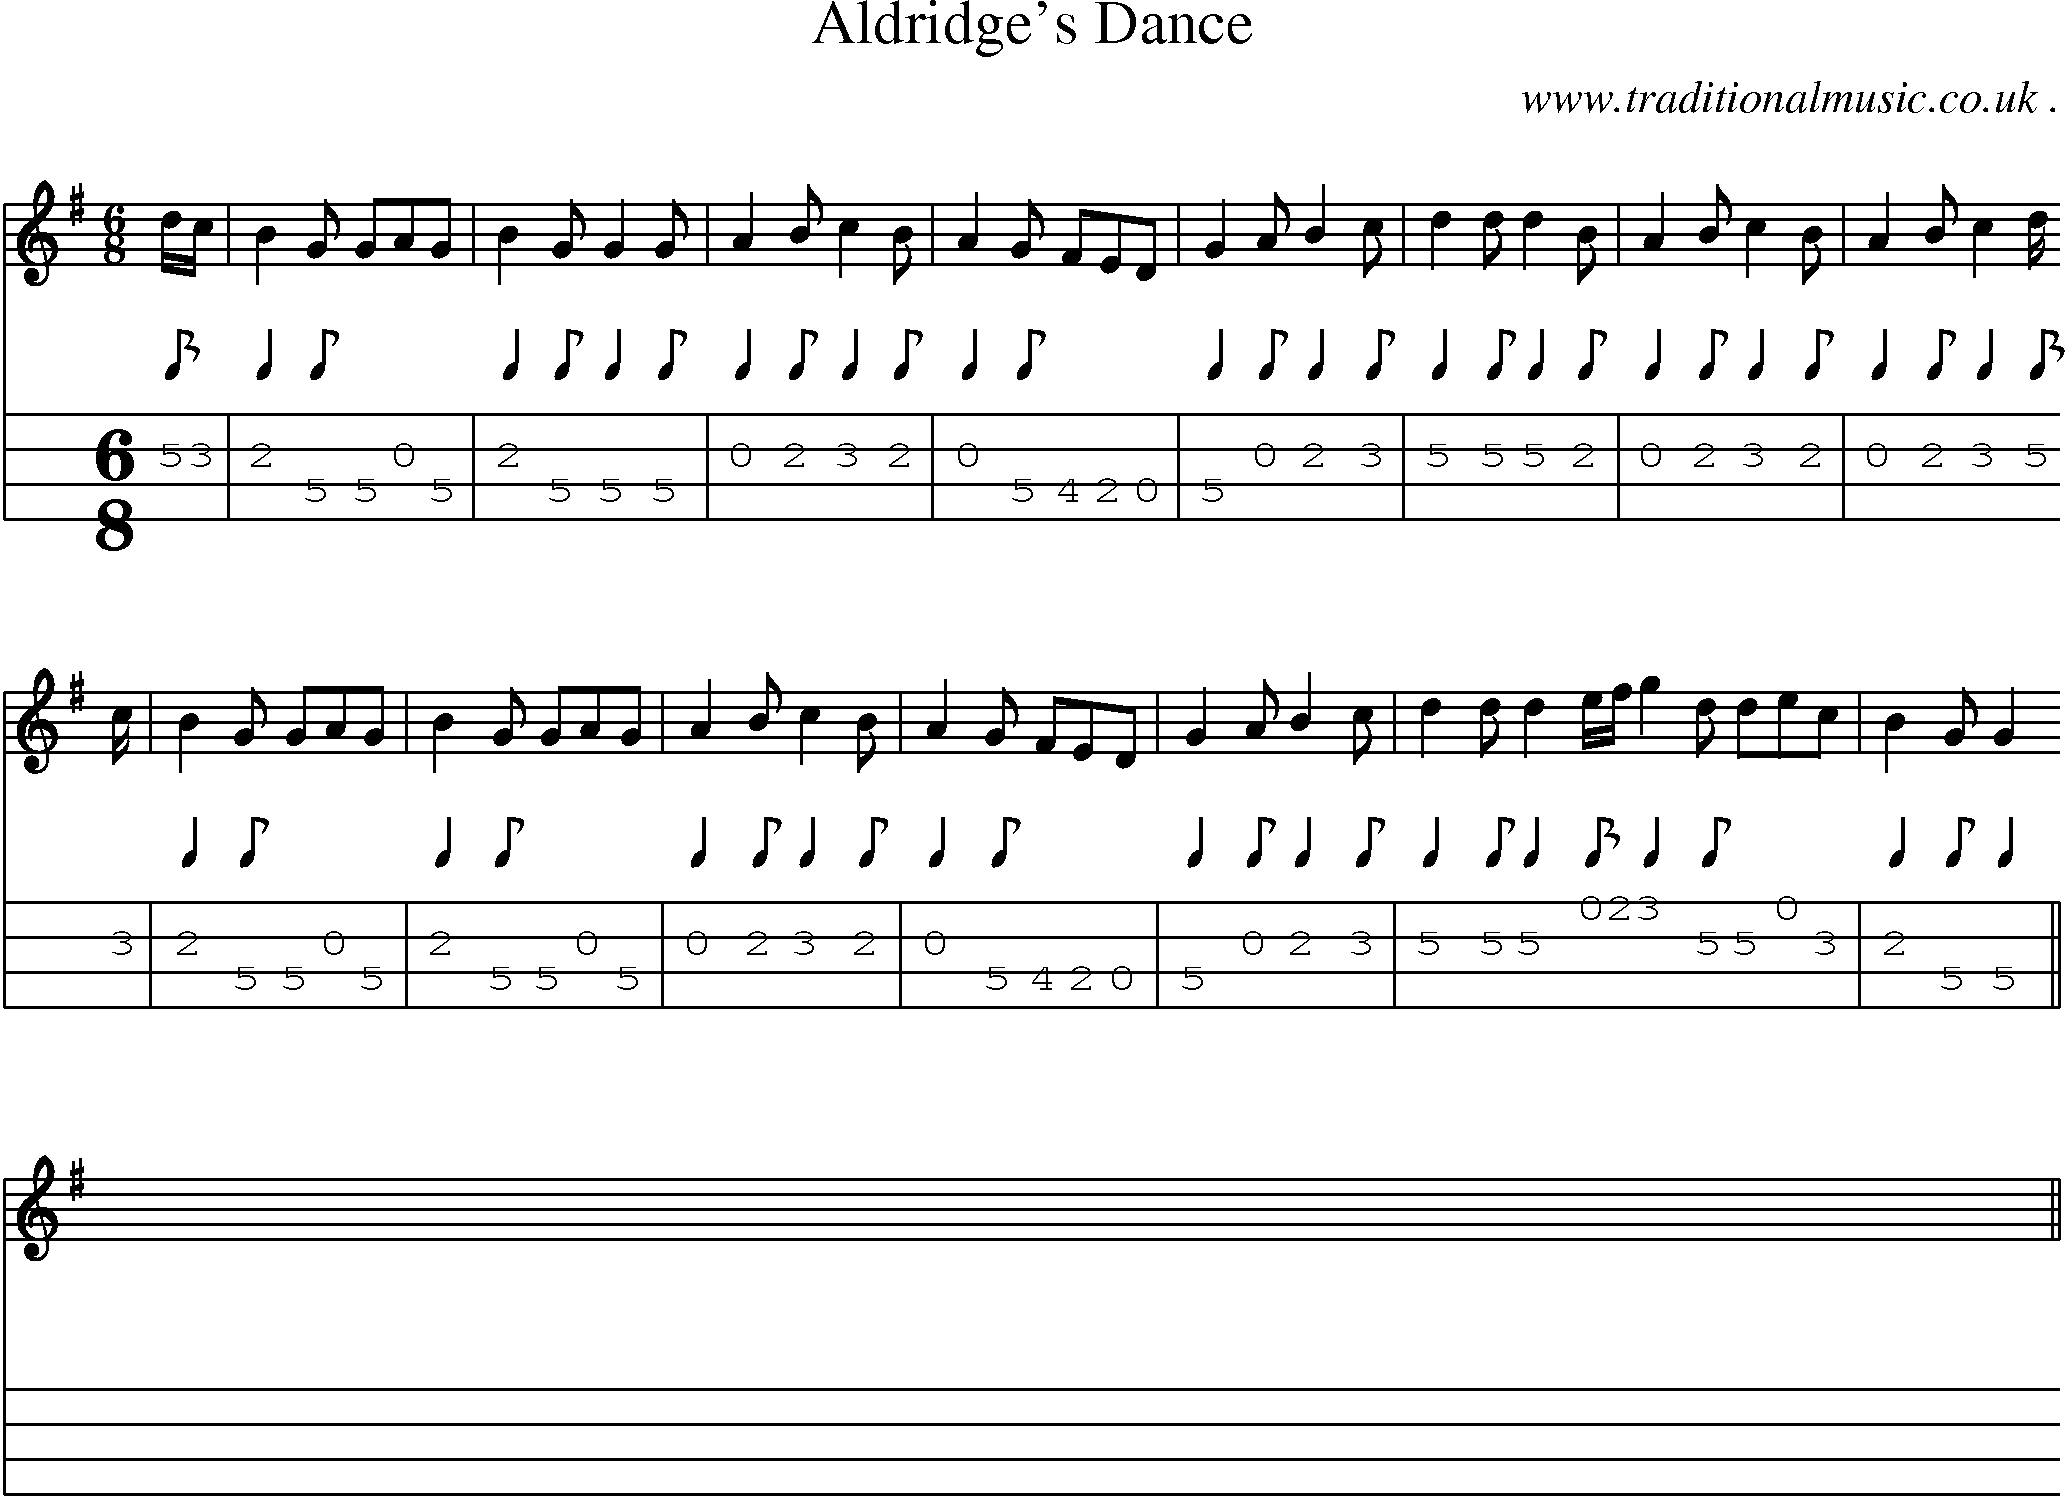 Sheet-Music and Mandolin Tabs for Aldridges Dance